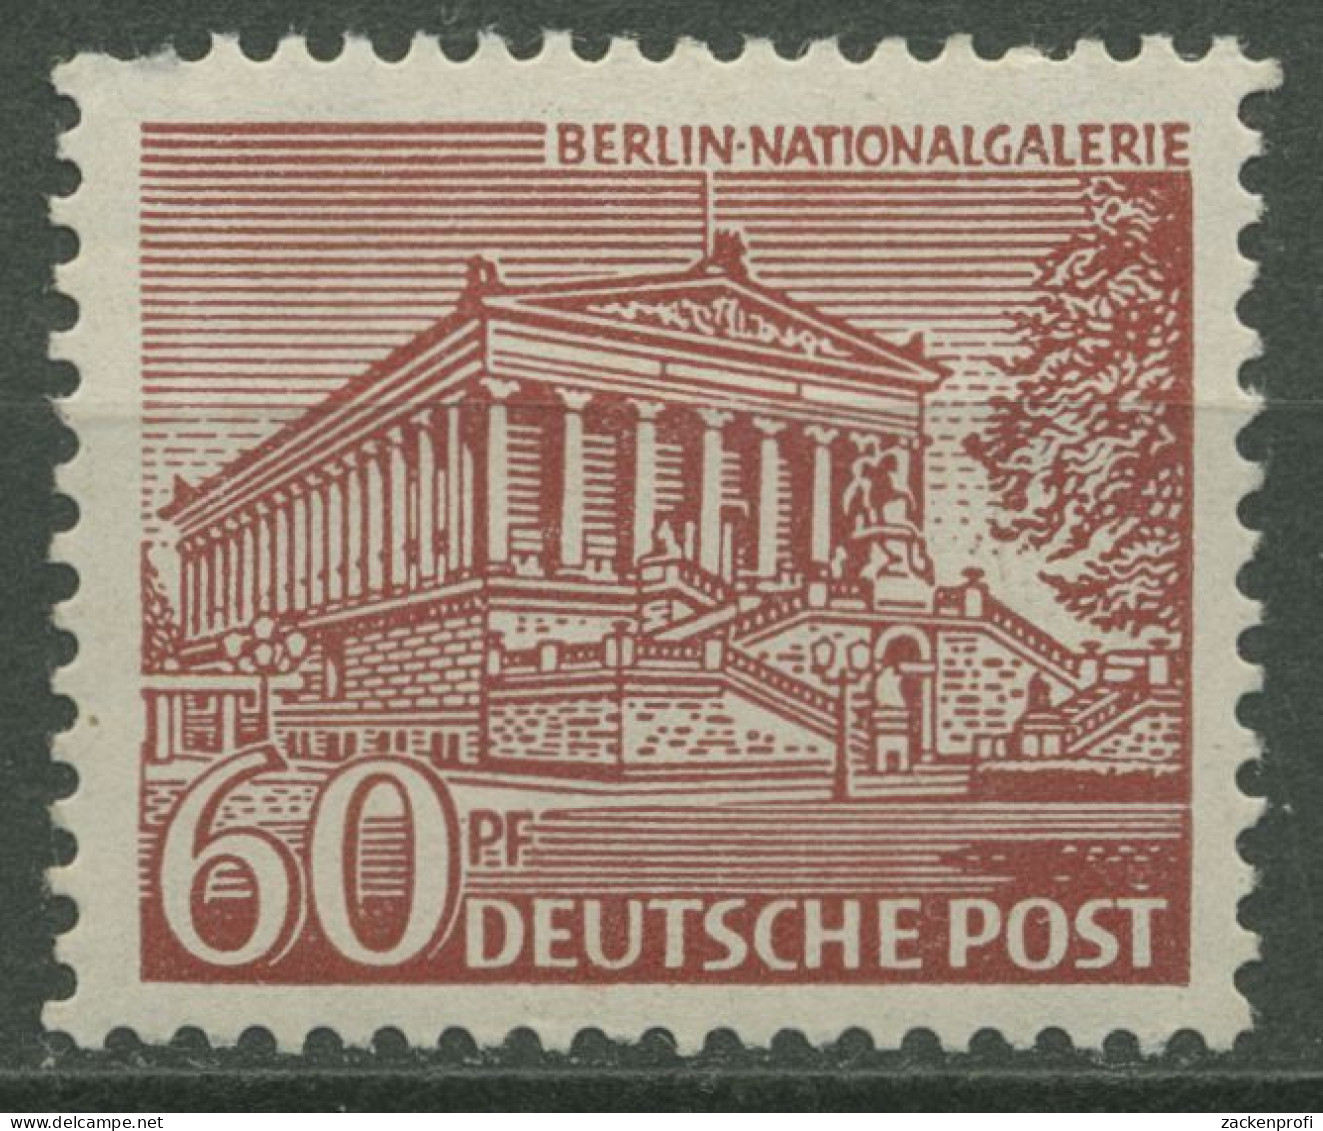 Berlin 1949 Berliner Bauten 54 Mit Falz, Zahnfehler (R80879) - Neufs